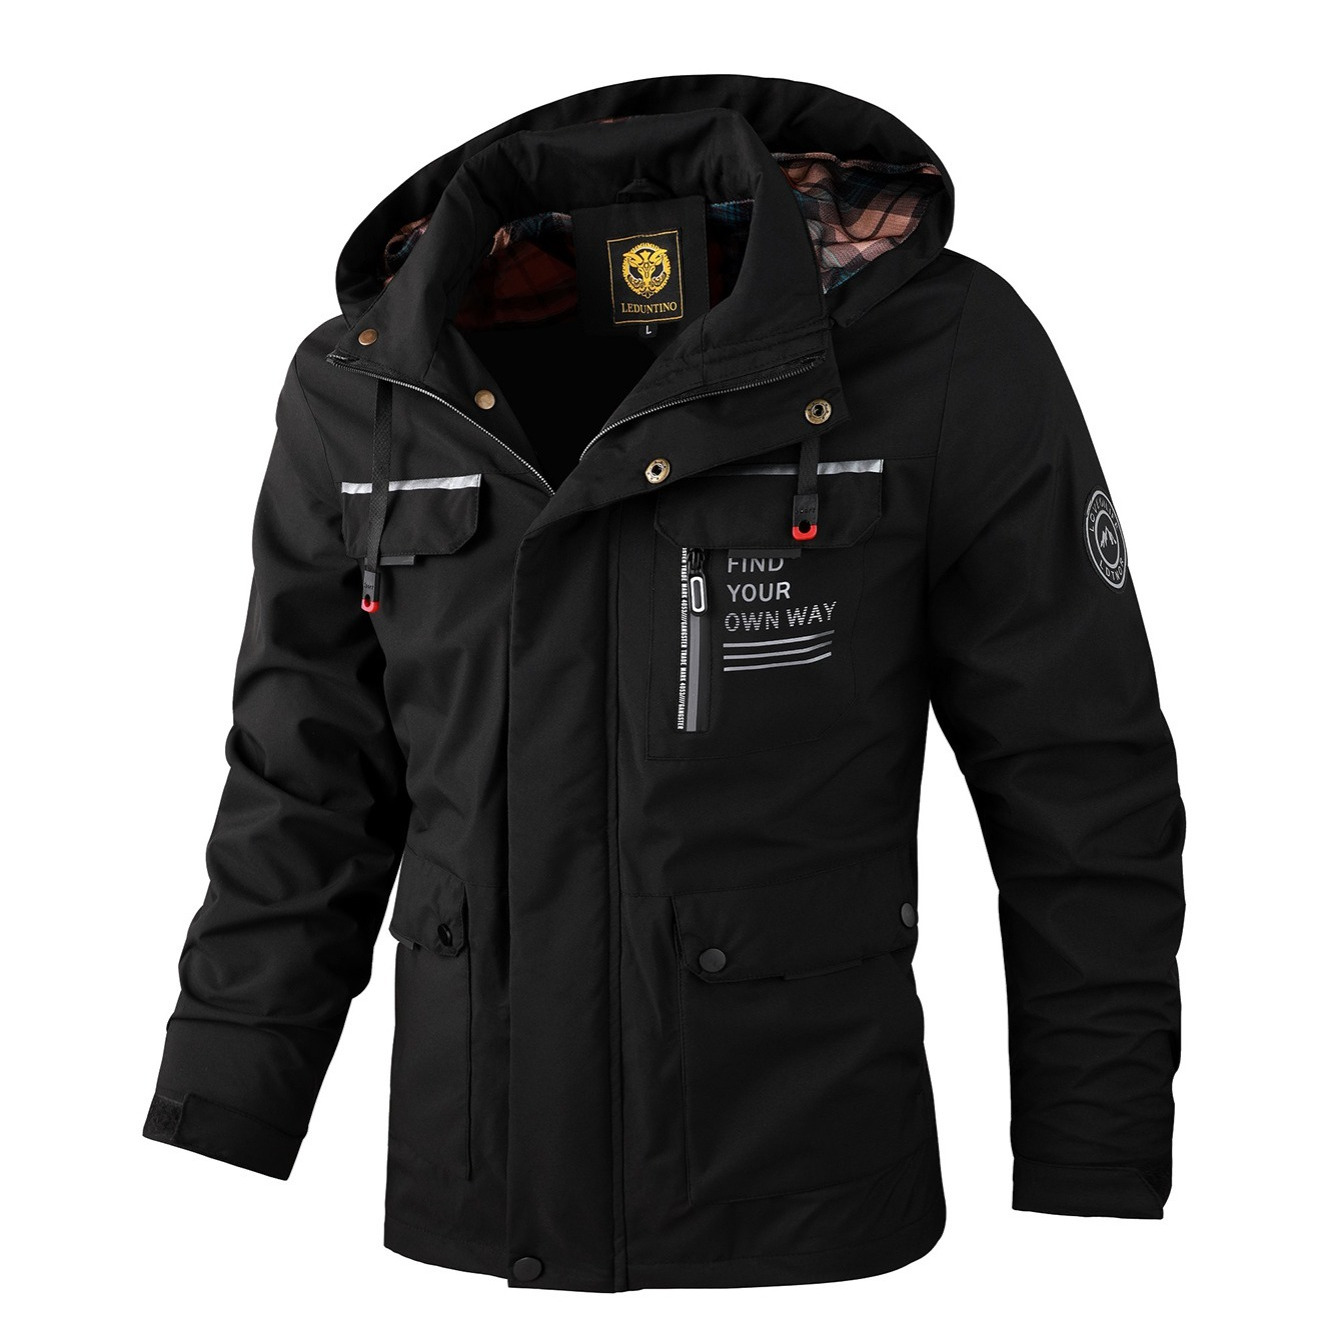 

Men's Fashion Casual Windbreaker Jacket Coat, Outdoor Waterproof Thin Jacket For Spring & Fall